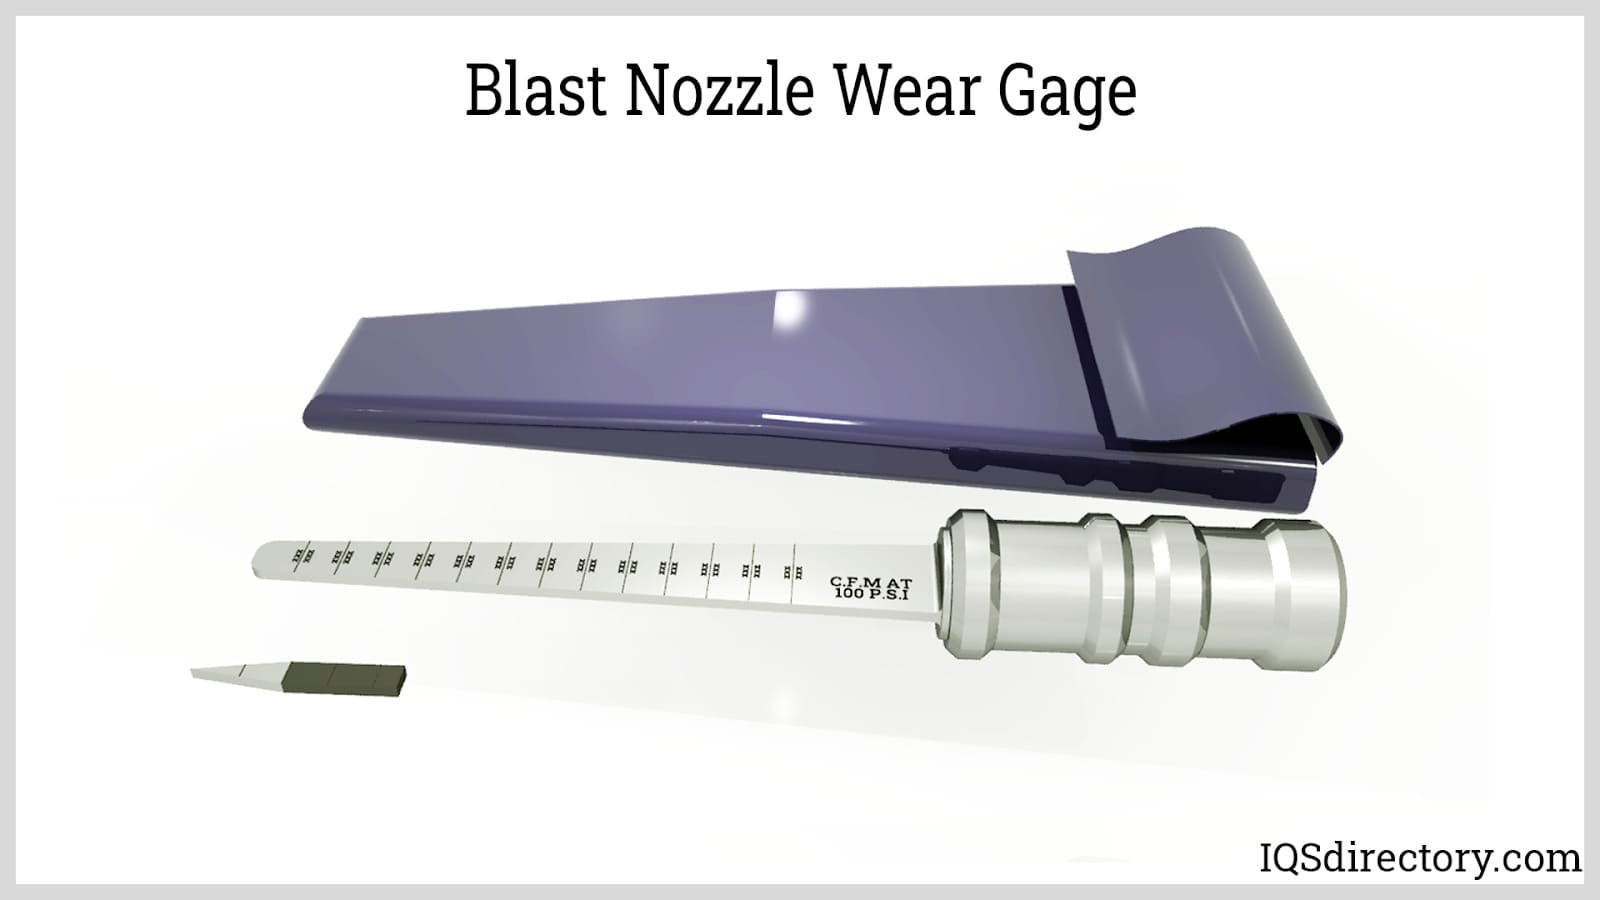 Blast nozzle wear gage